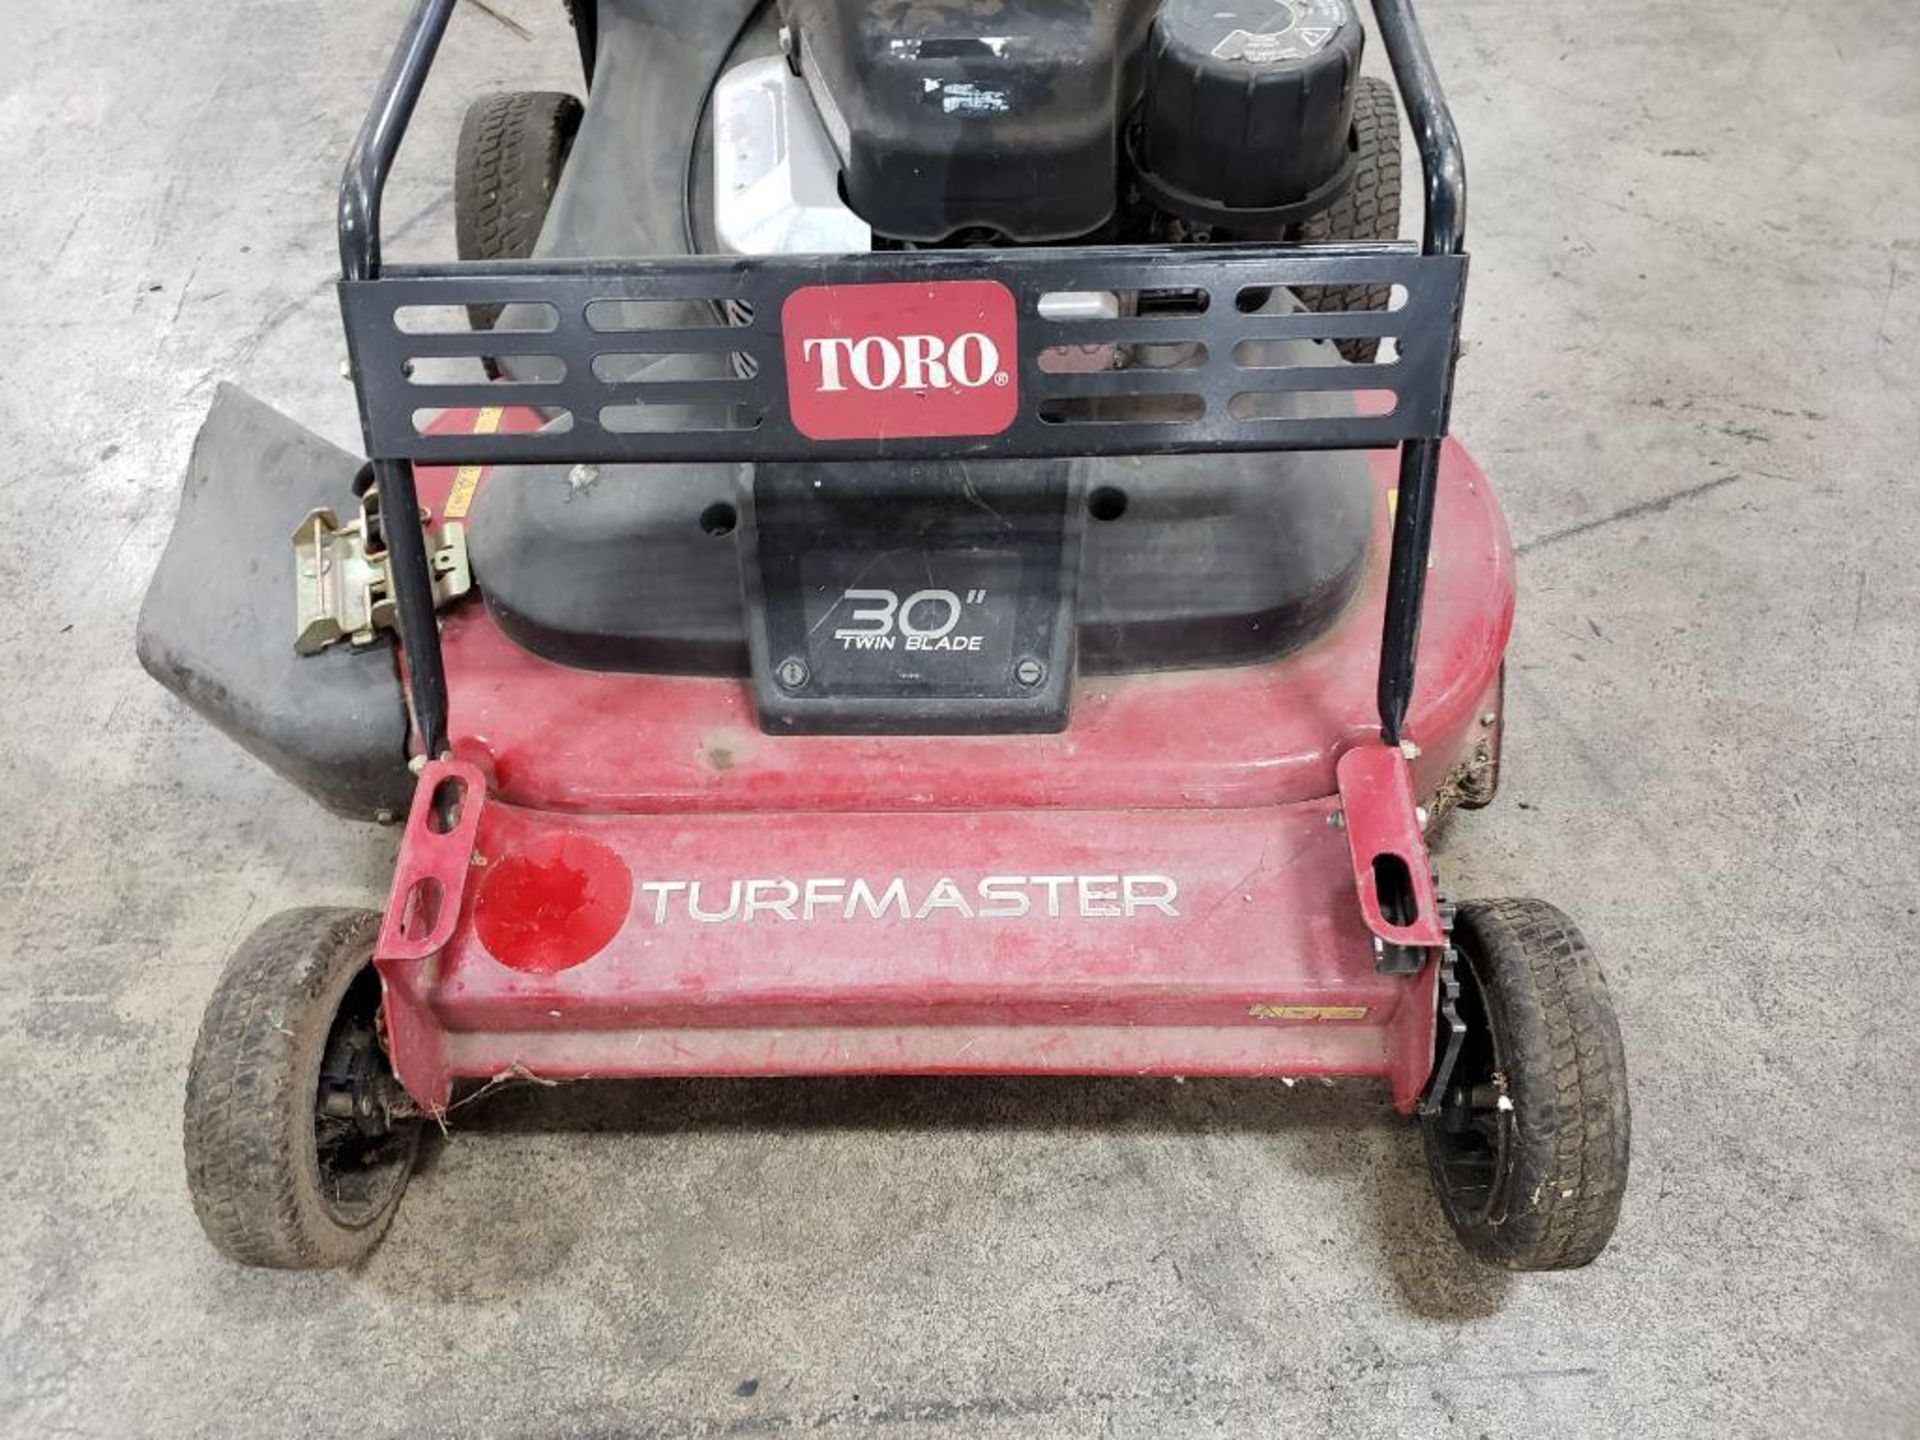 Toro Turfmaster 22200 30" twin blade lawn mower. - Image 2 of 10